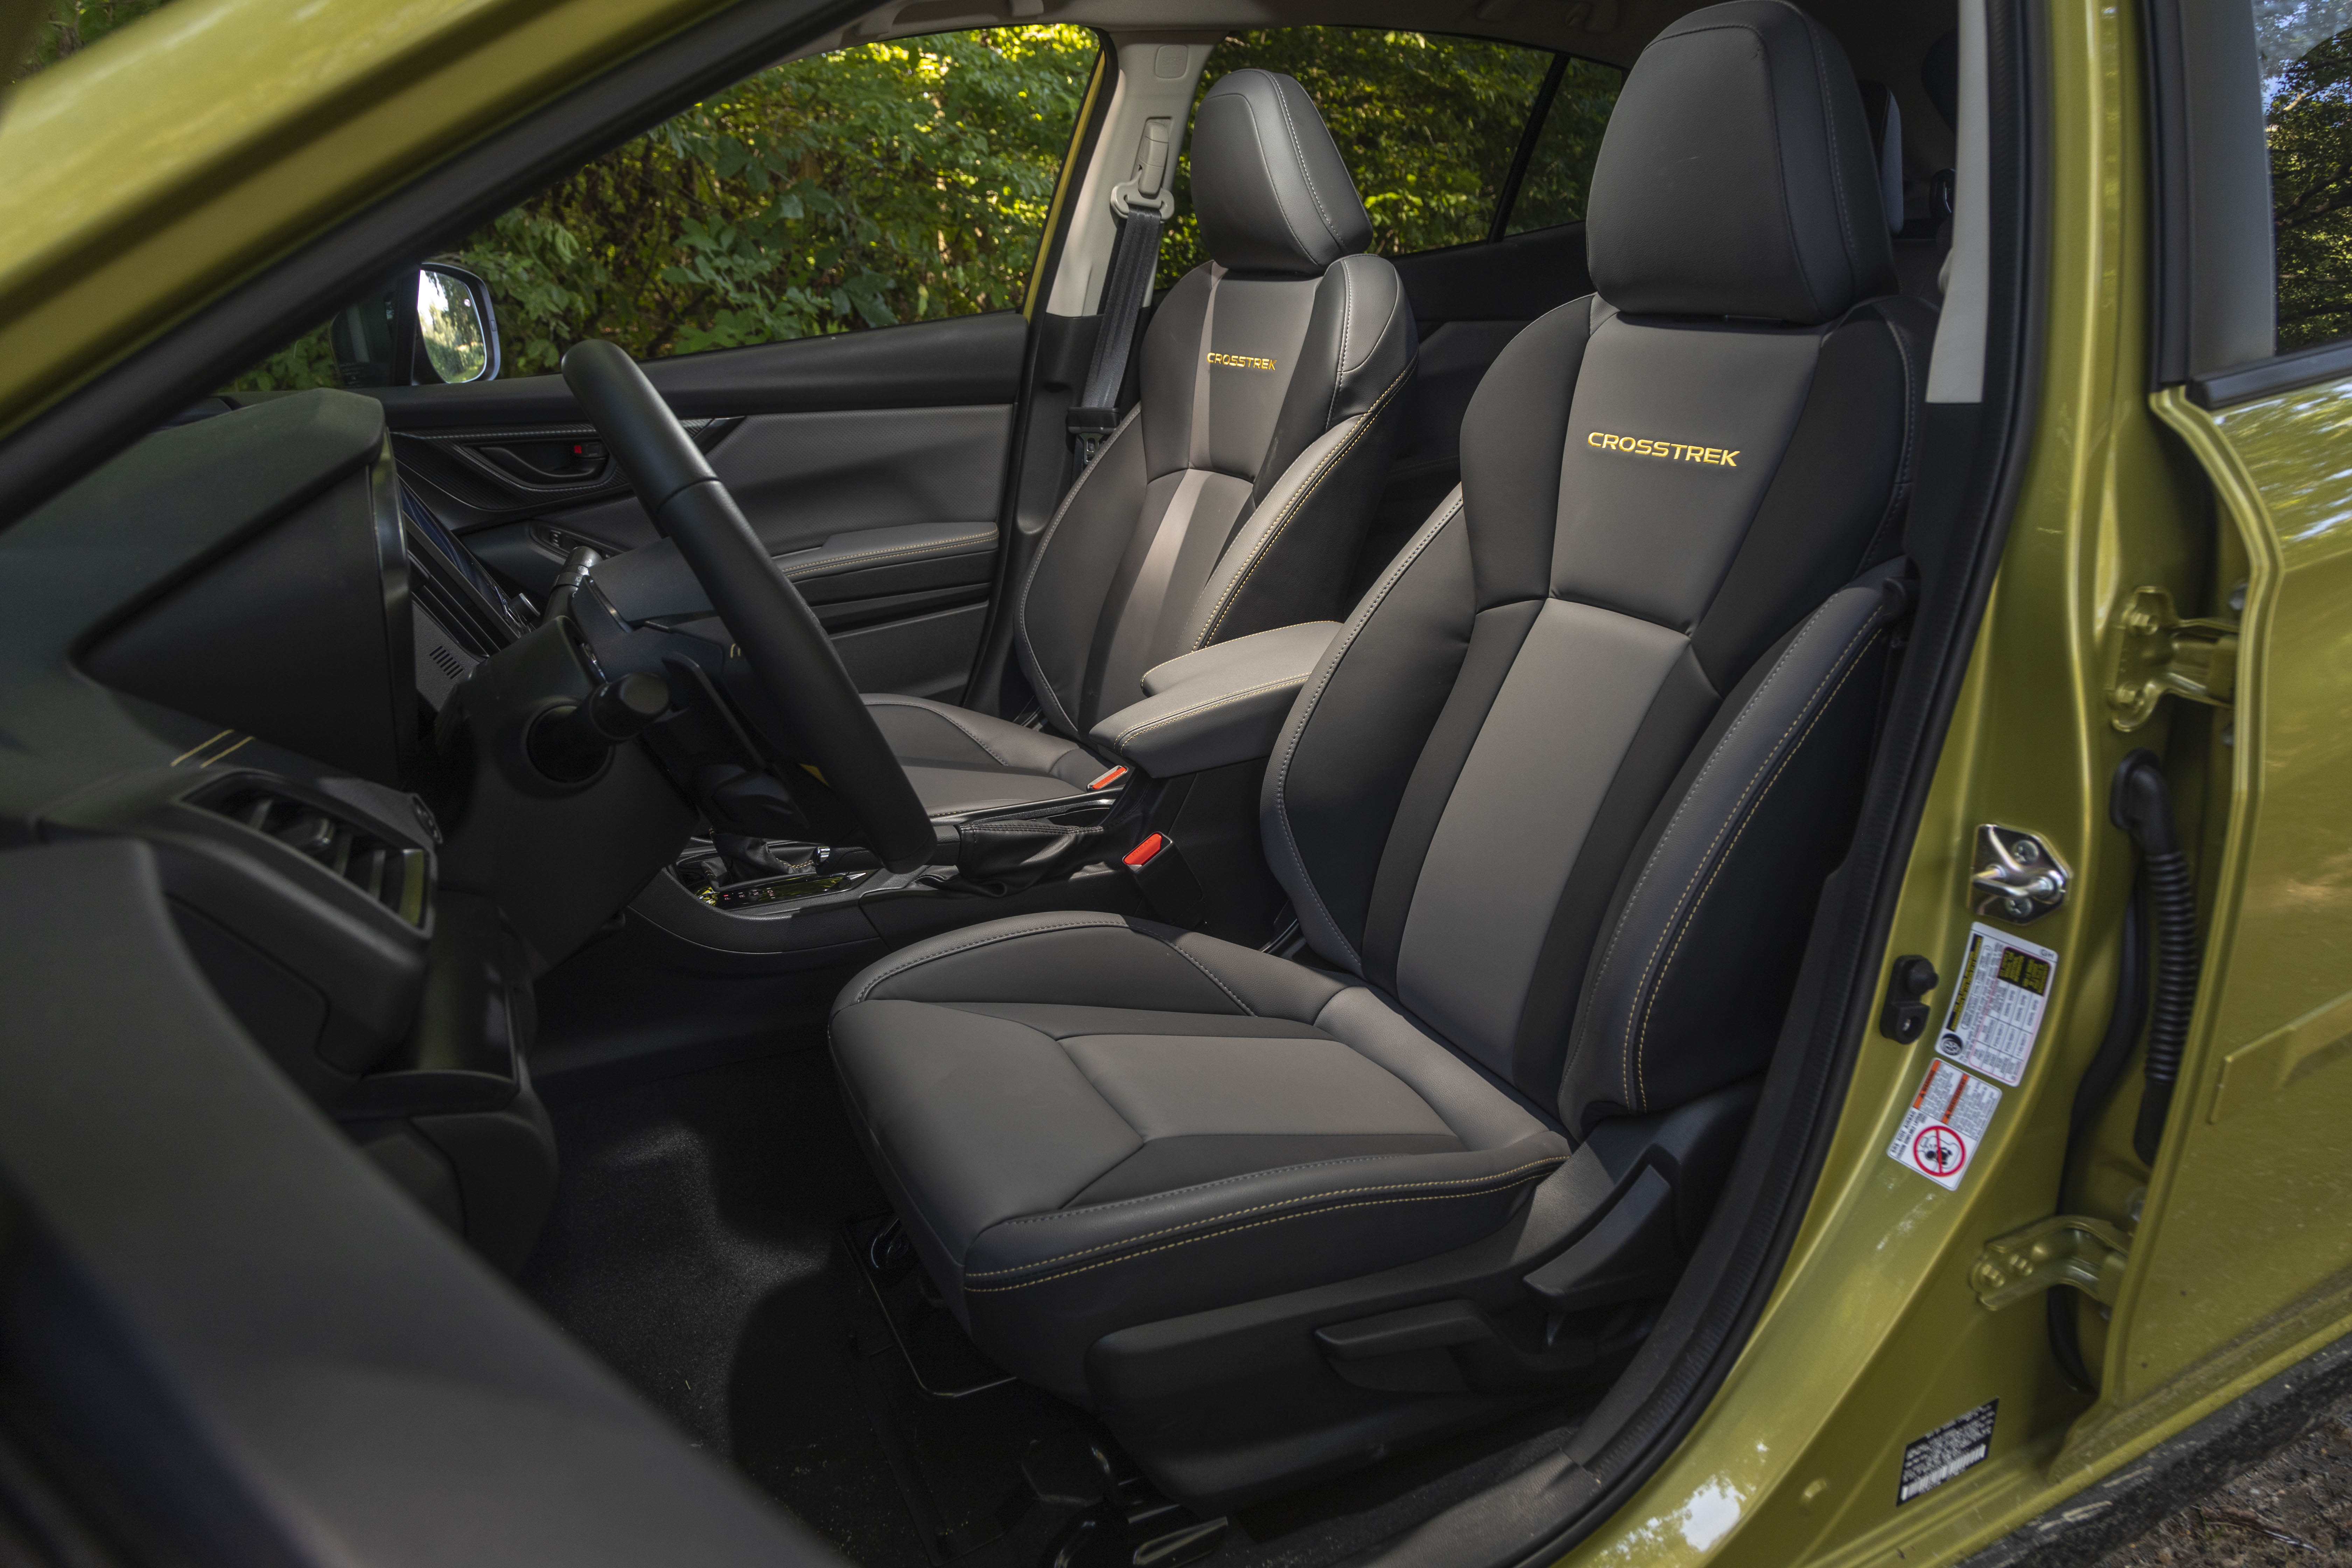 2021 Subaru Crosstrek Sport StarTex interior